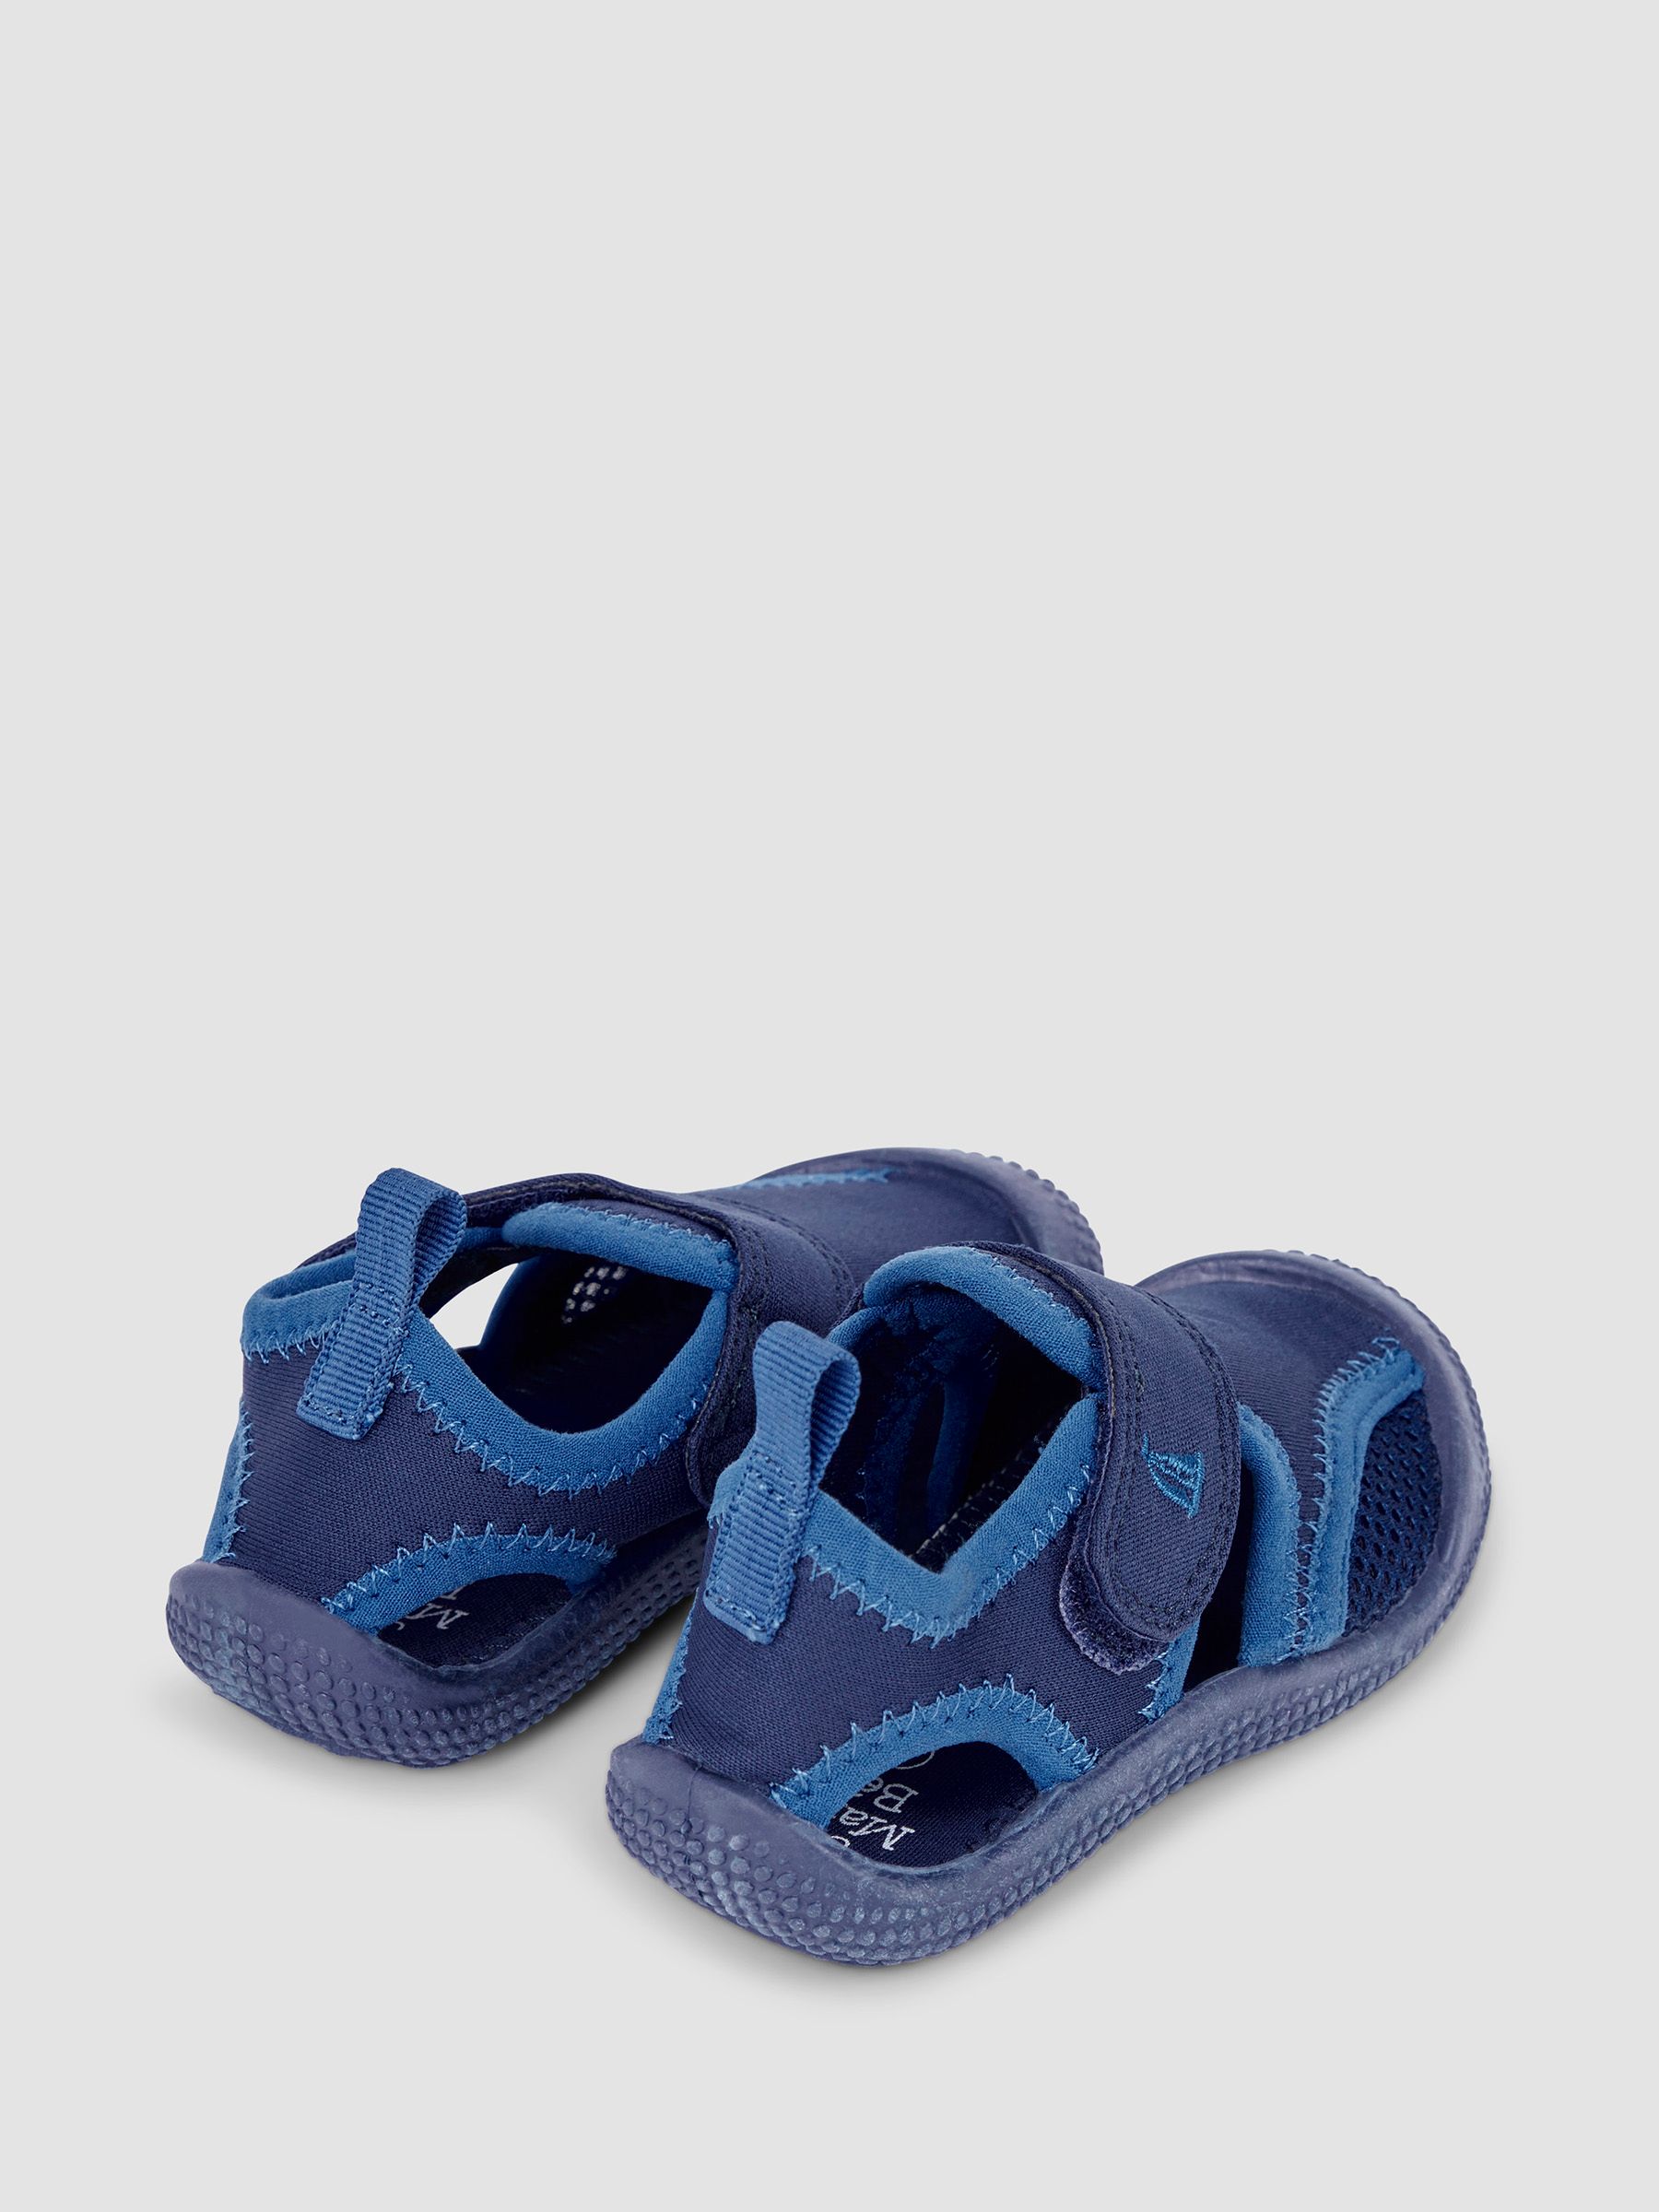 Buy Navy Blue Beach & Swim Sandals from the JoJo Maman Bébé UK online shop